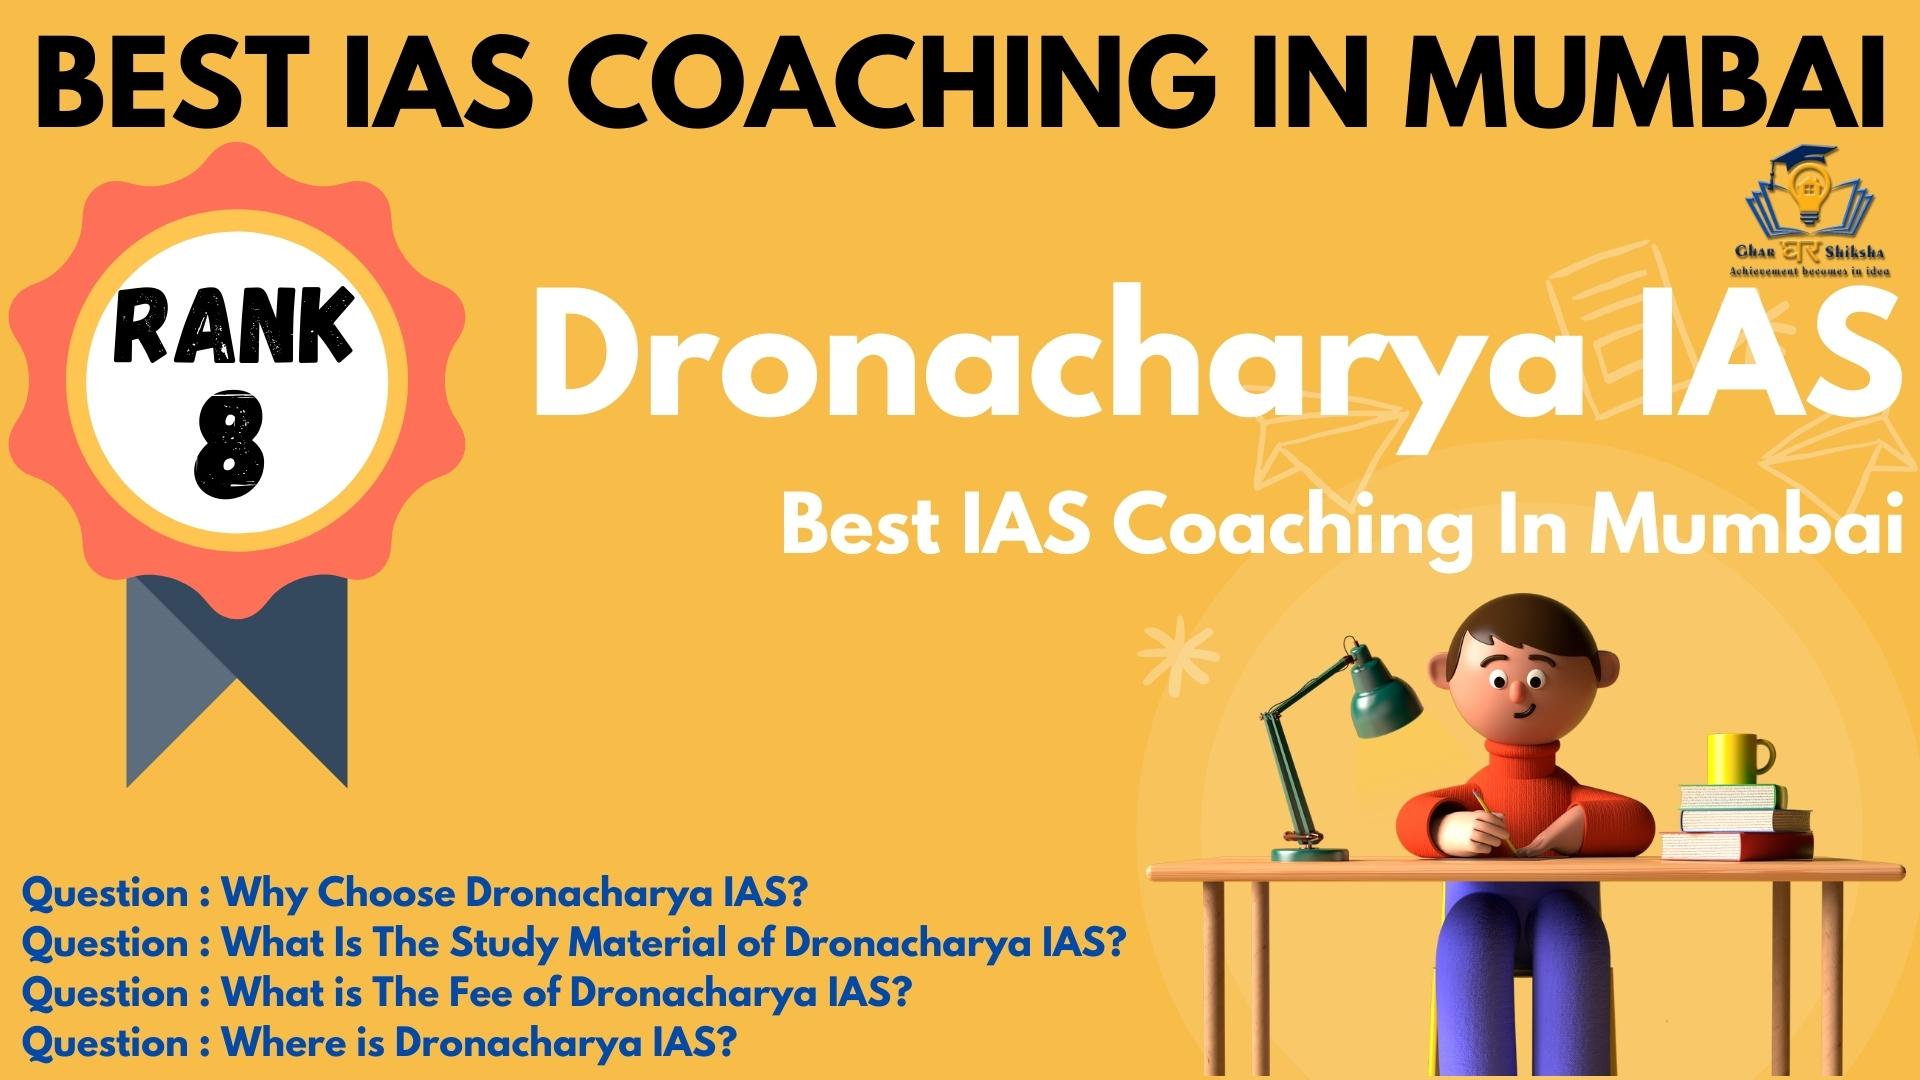 Best IAS Coaching In Mumbai